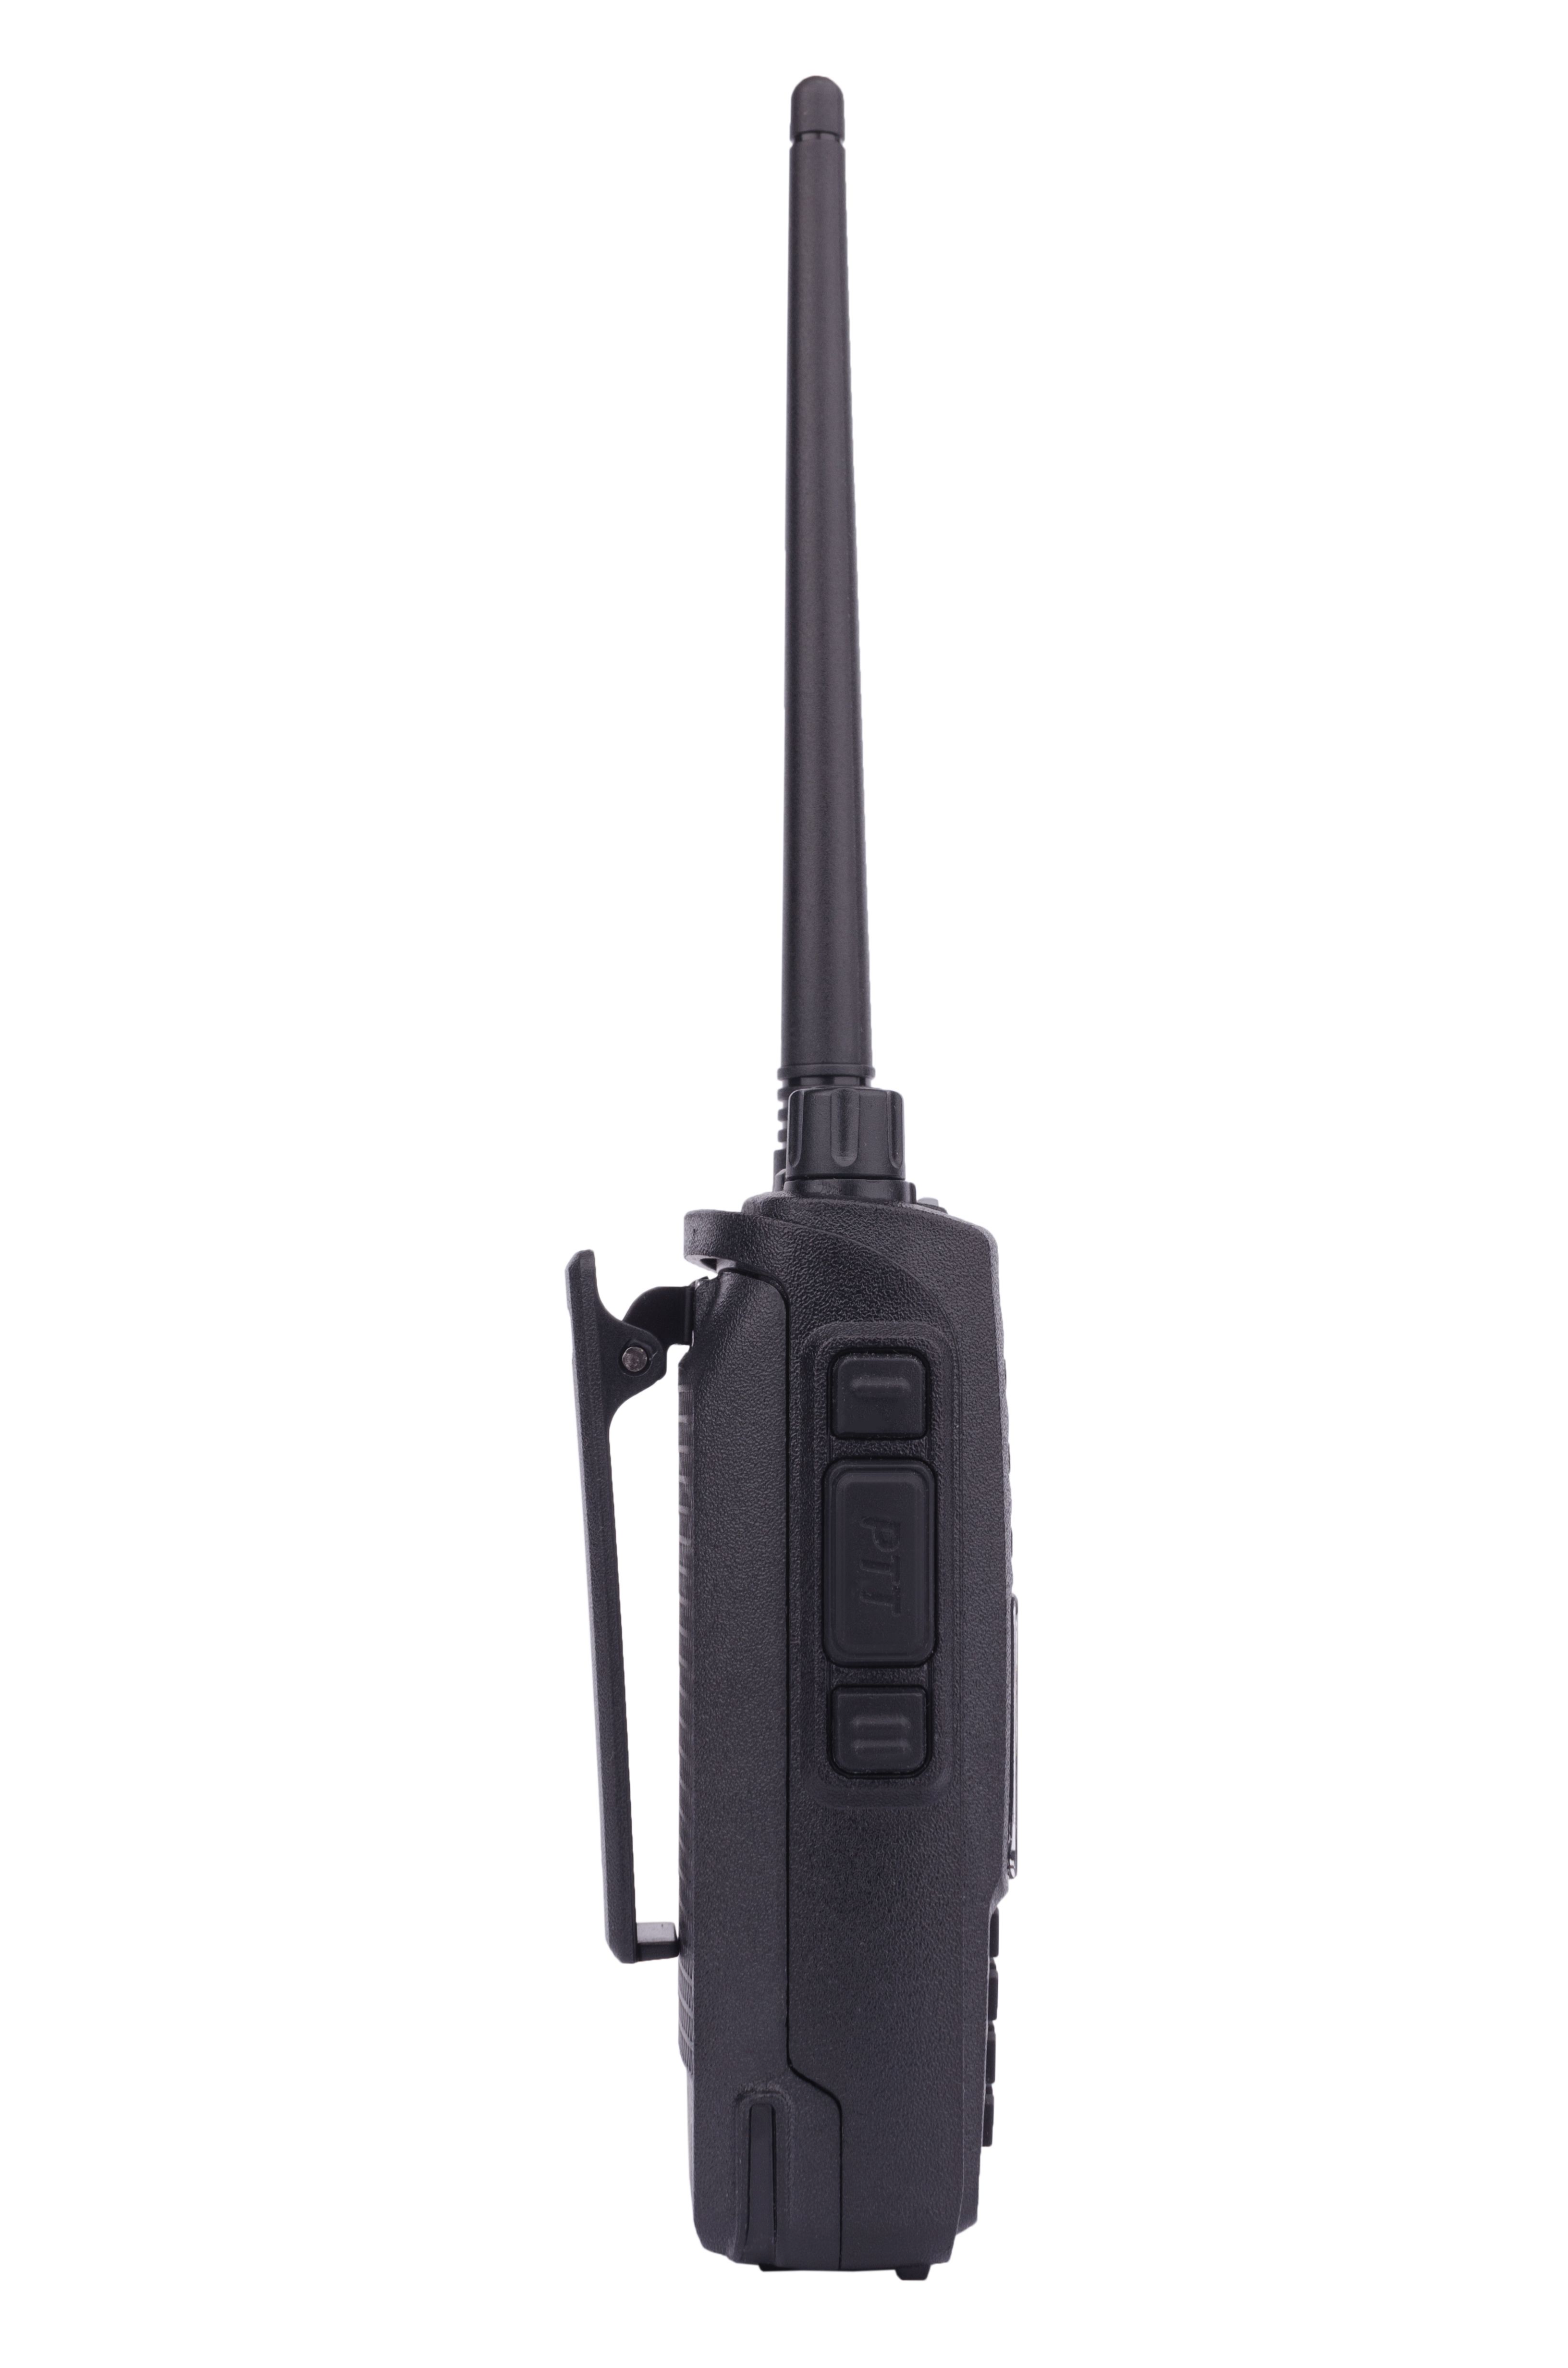 Baofeng DM-1702 Portable DMR Radio with GPS